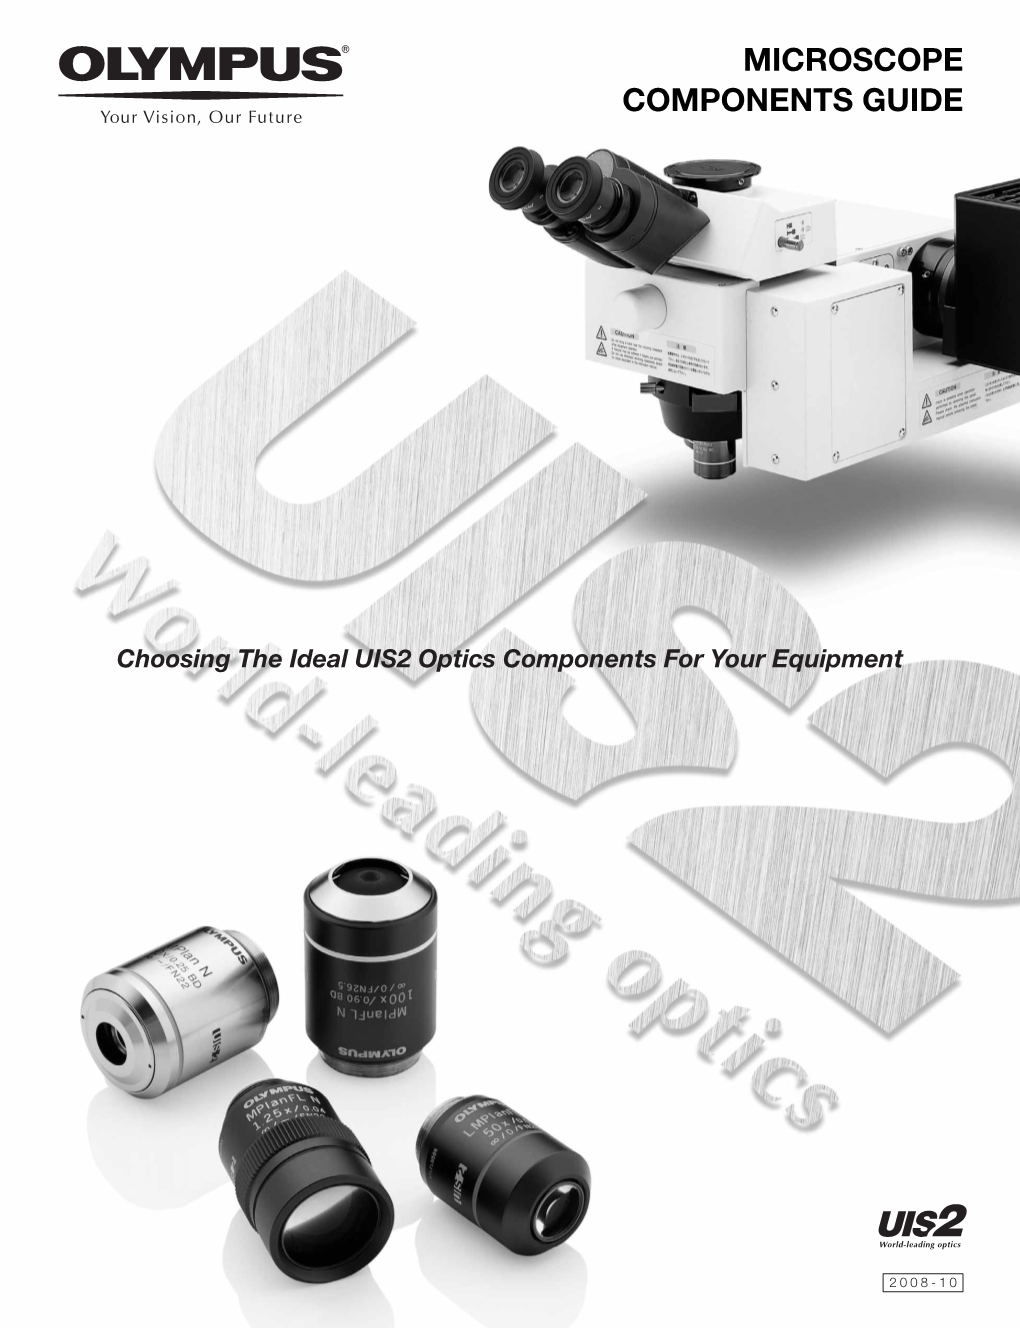 Microscope Components Guide